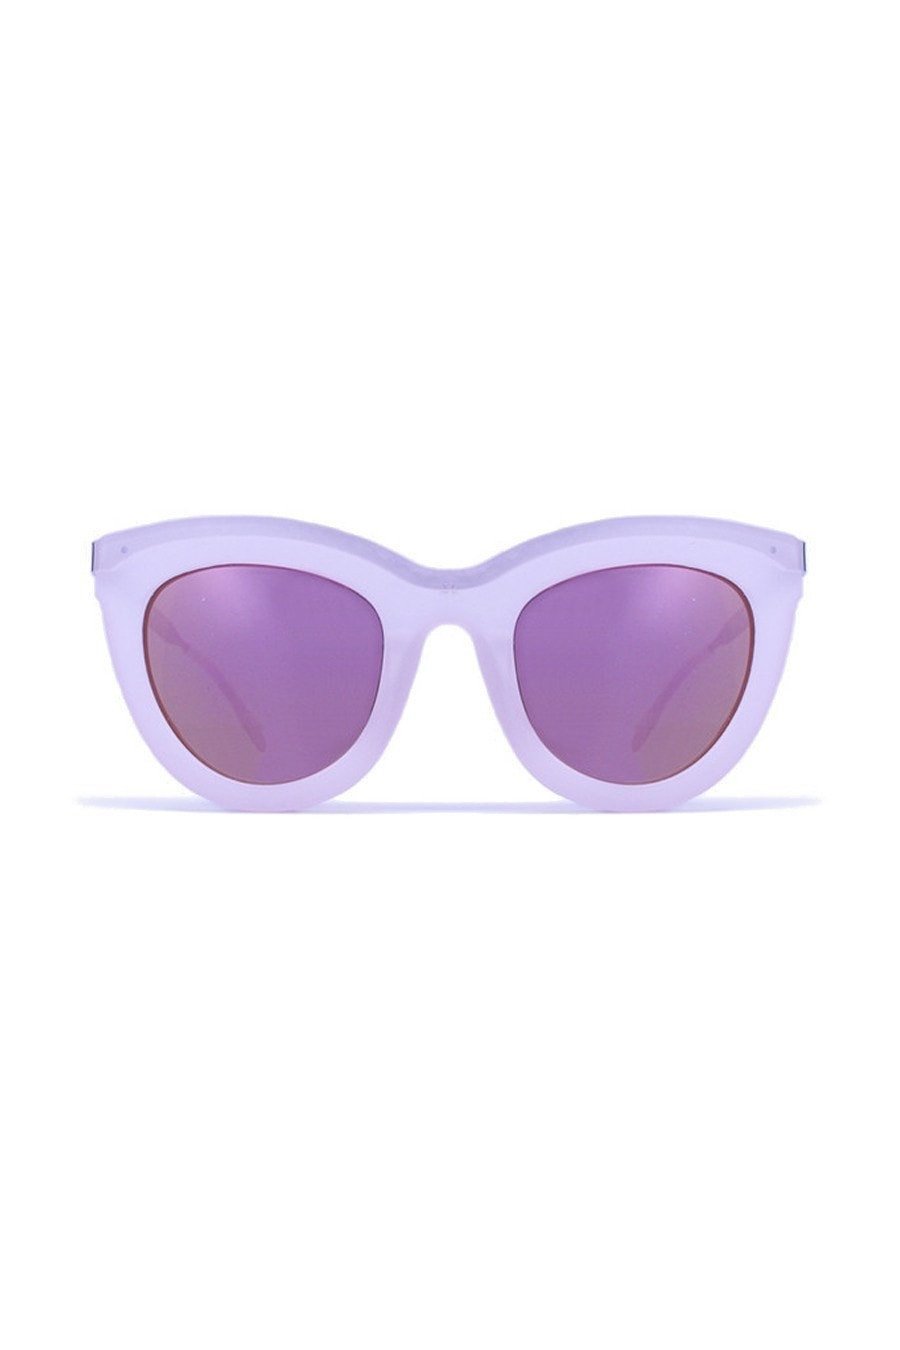 Quay Australia ECLIPSE Pink Oversize Designer Sunglasses QUAY Australia$ AfterPay Humm ZipPay LayBuy Sezzle